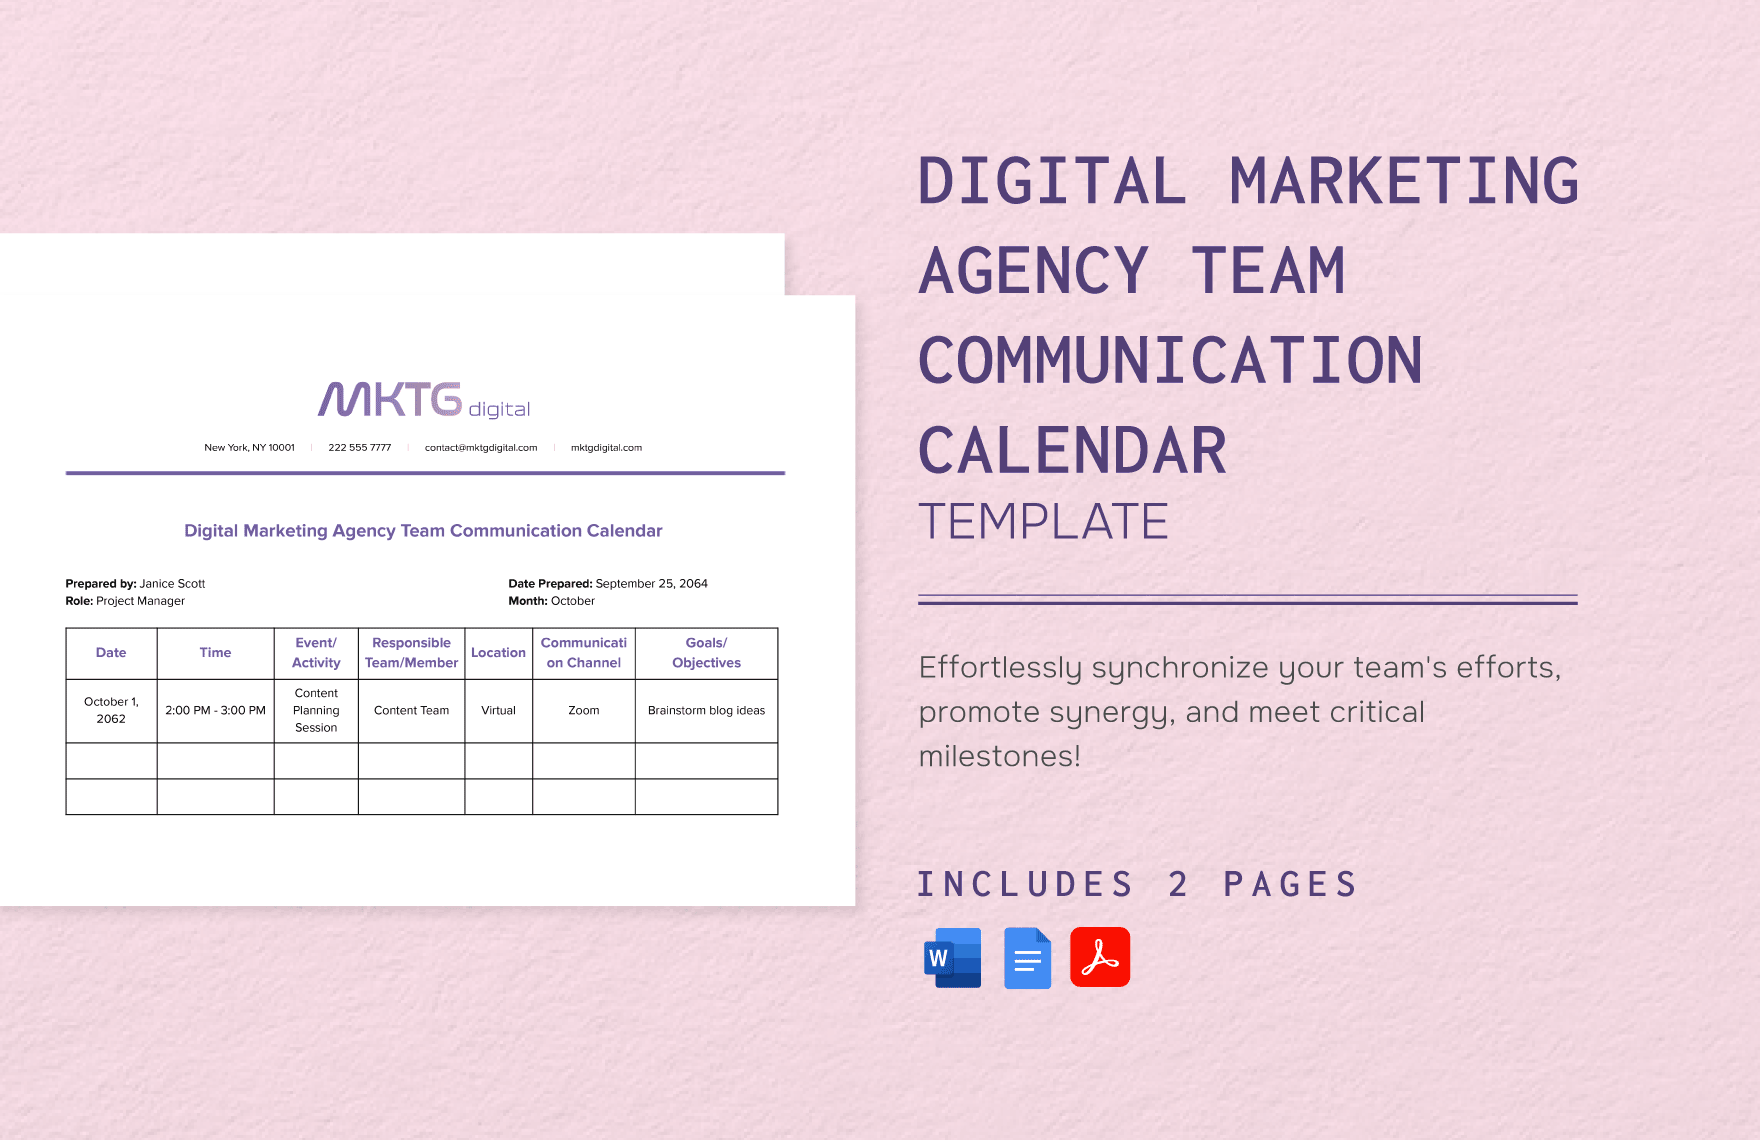 Digital Marketing Agency Team Communication Calendar Template